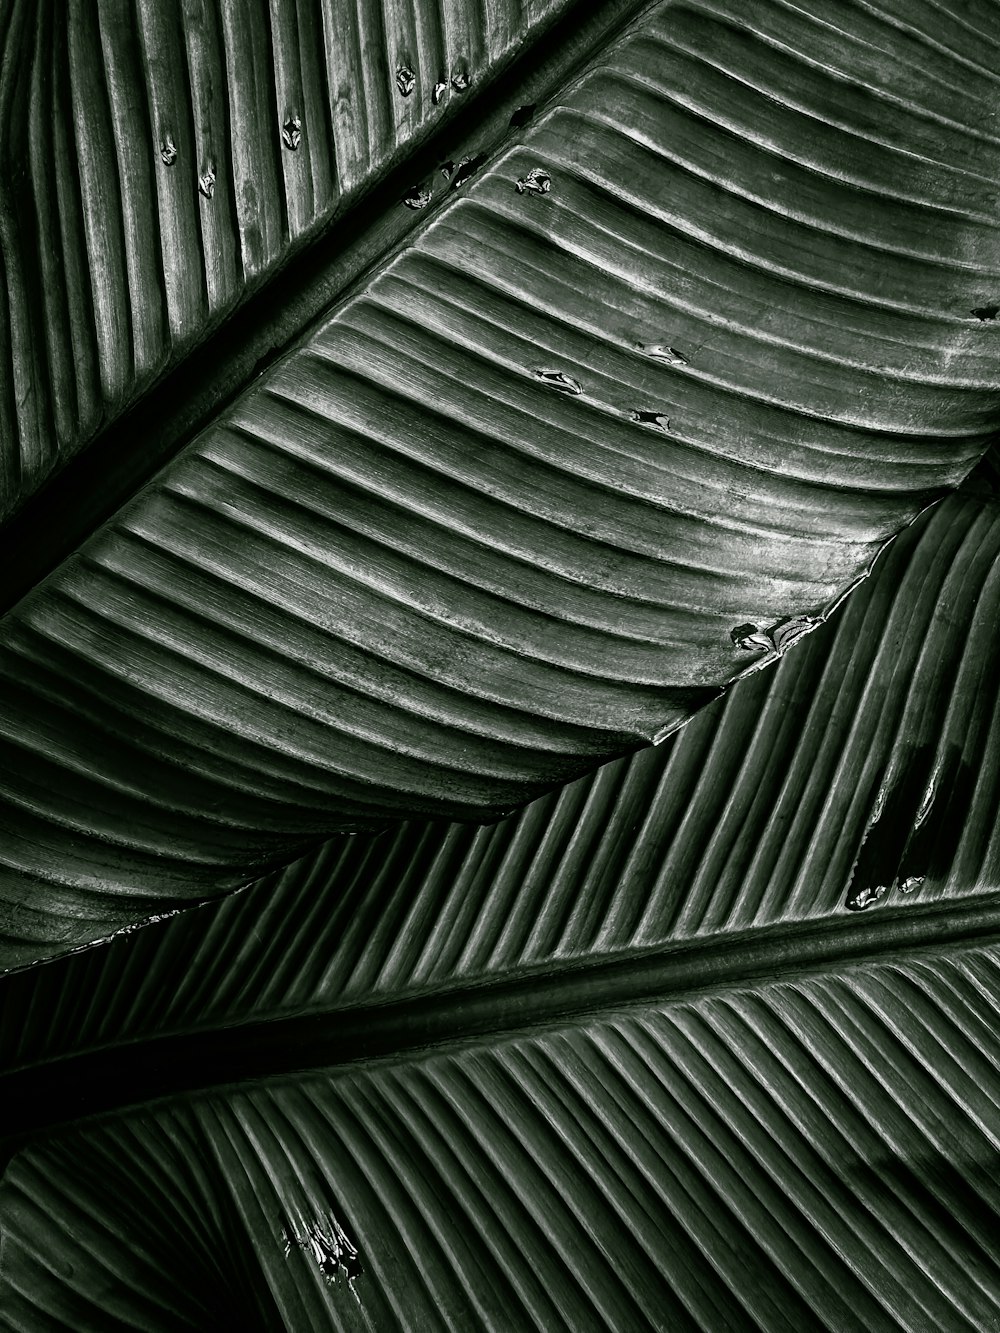 a black and white photo of a banana leaf